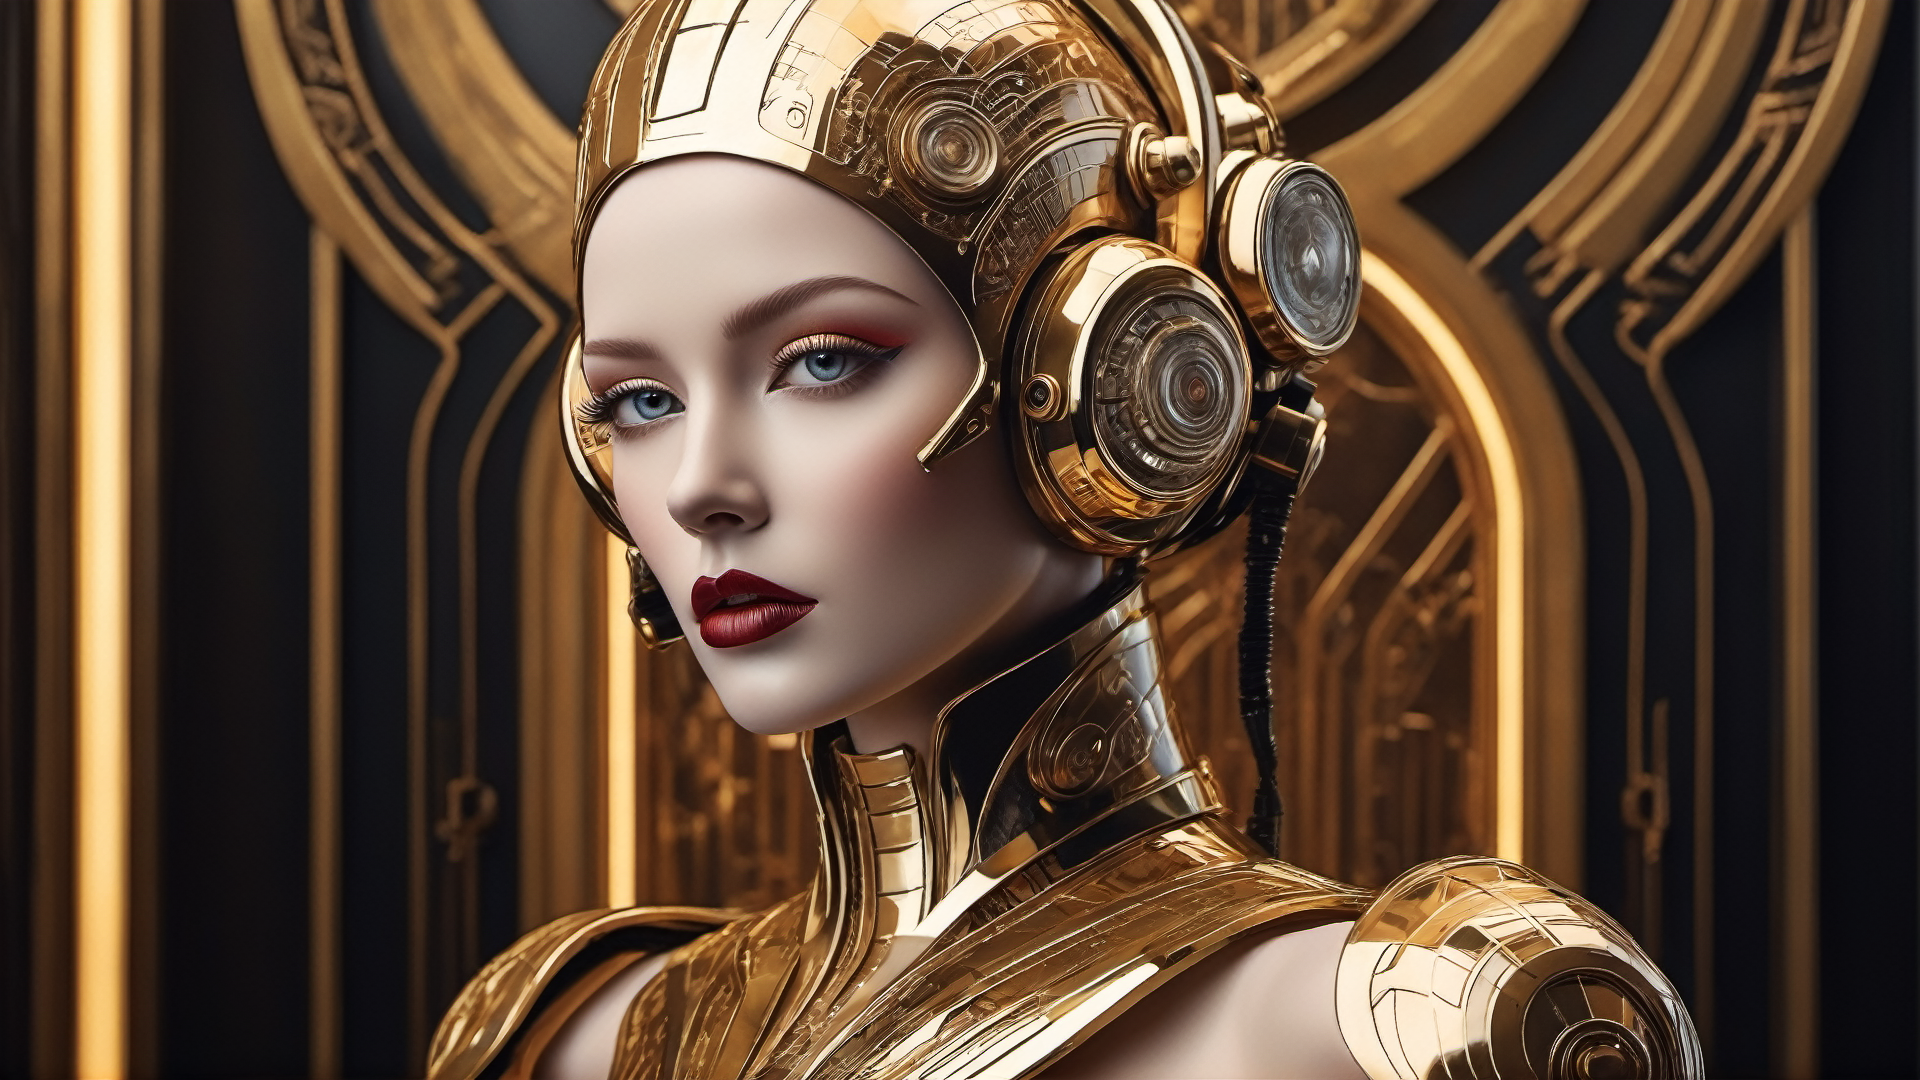 General 1920x1080 AI art women CGI cyborg cybernetics robot gold background digital art looking at viewer parted lips